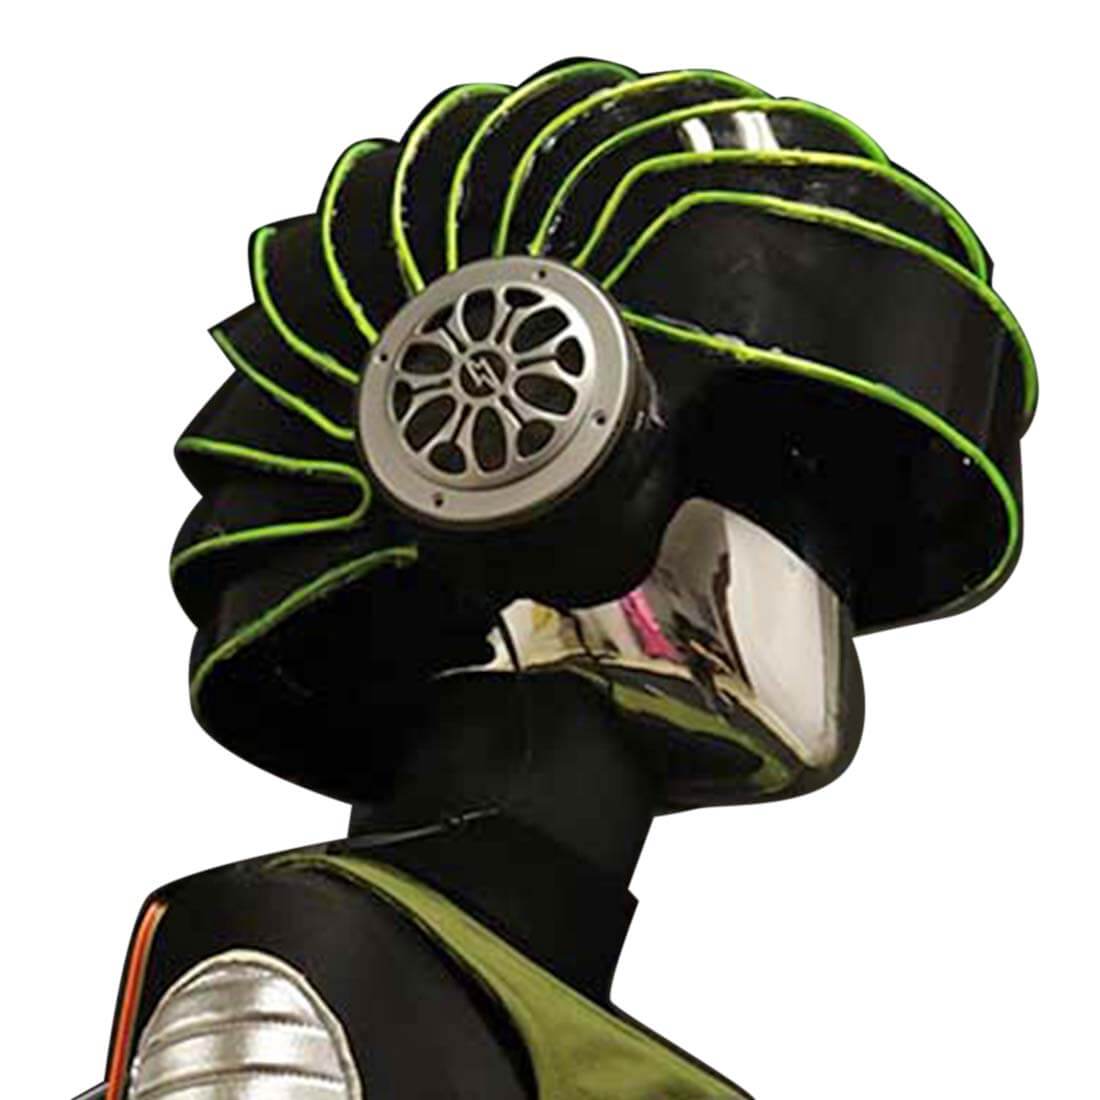 Future CyberPunk Helmet Mask with Light Cosplay Costume Props